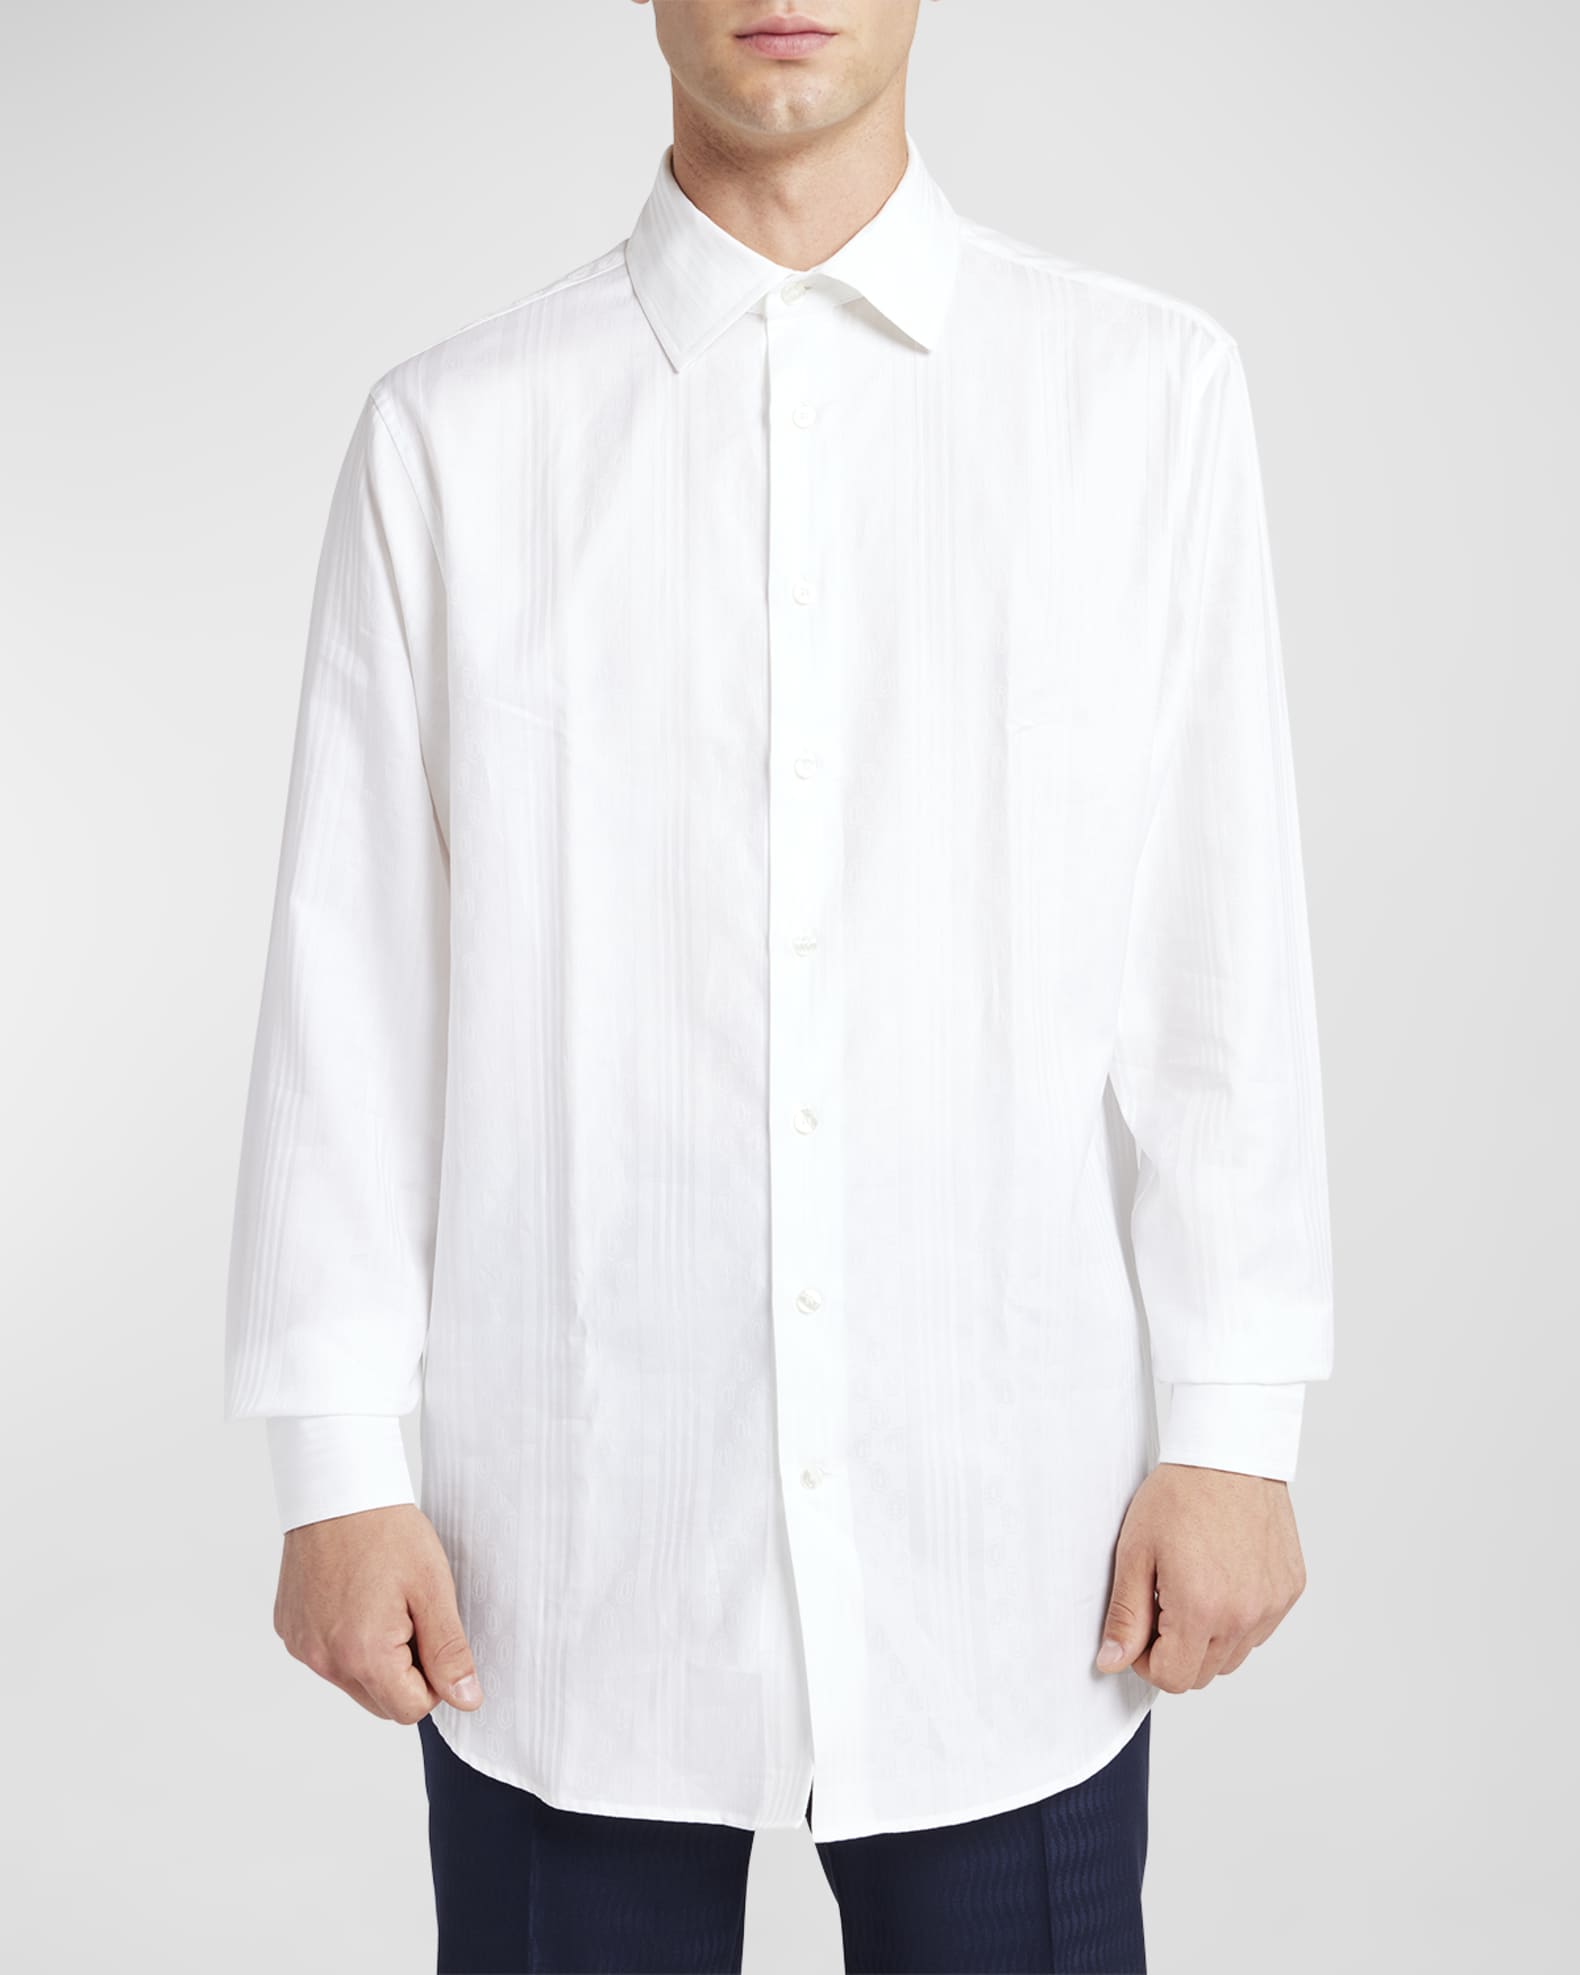 Etro Men's Tonal Paisley Jacquard Dress Shirt | Neiman Marcus